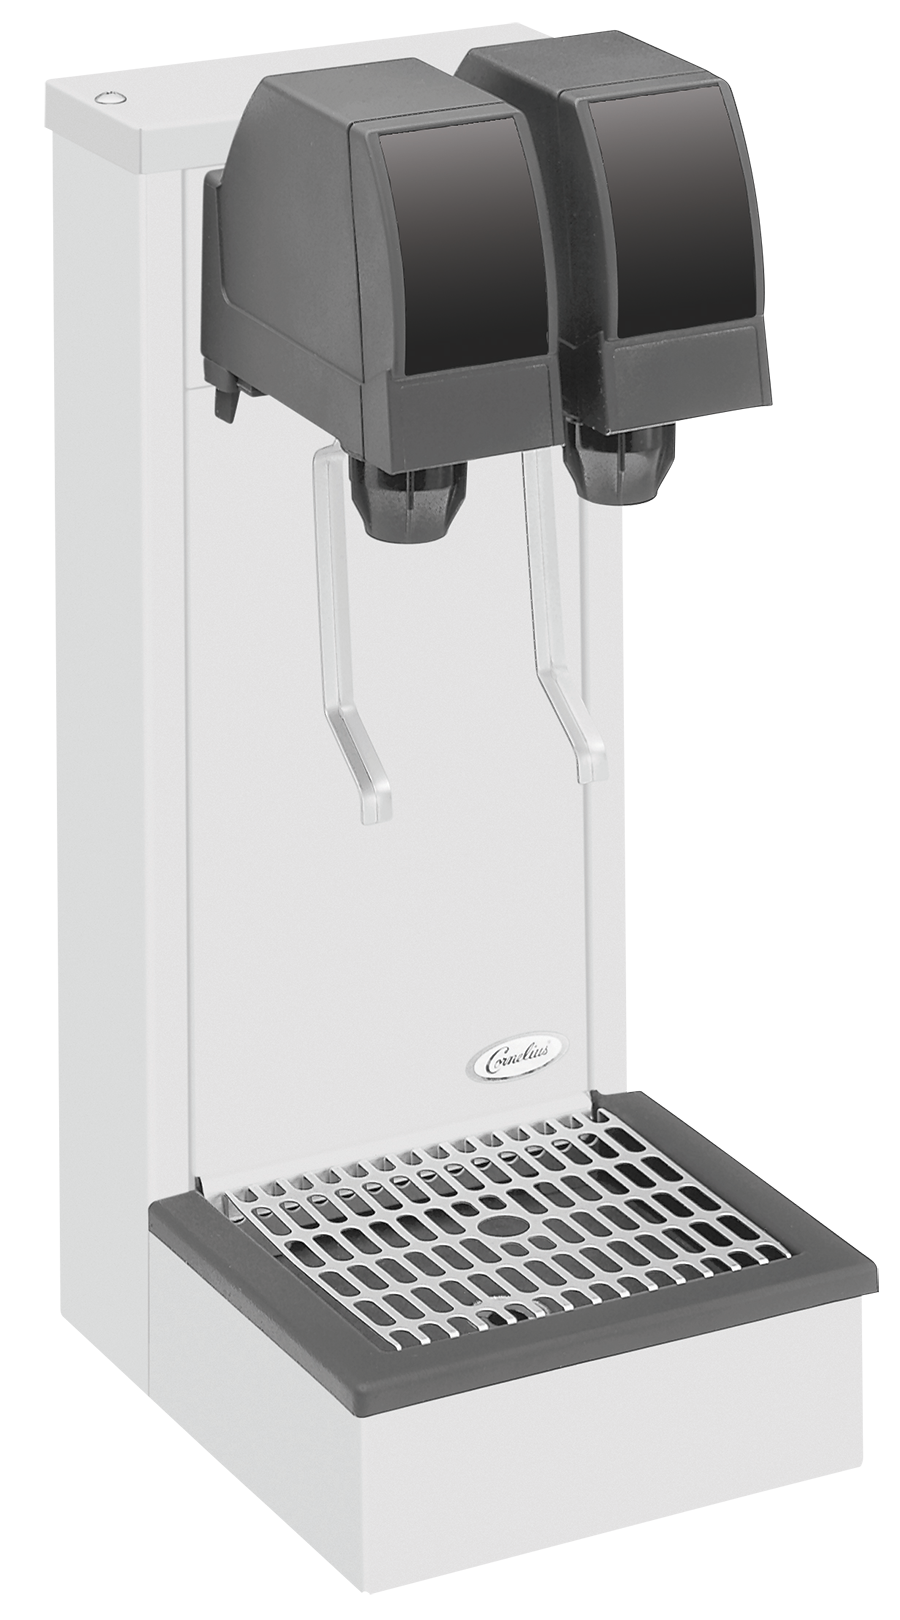 Cornelius Soda Drinking Machine Stand CB1522 with 6" adjustable legs 